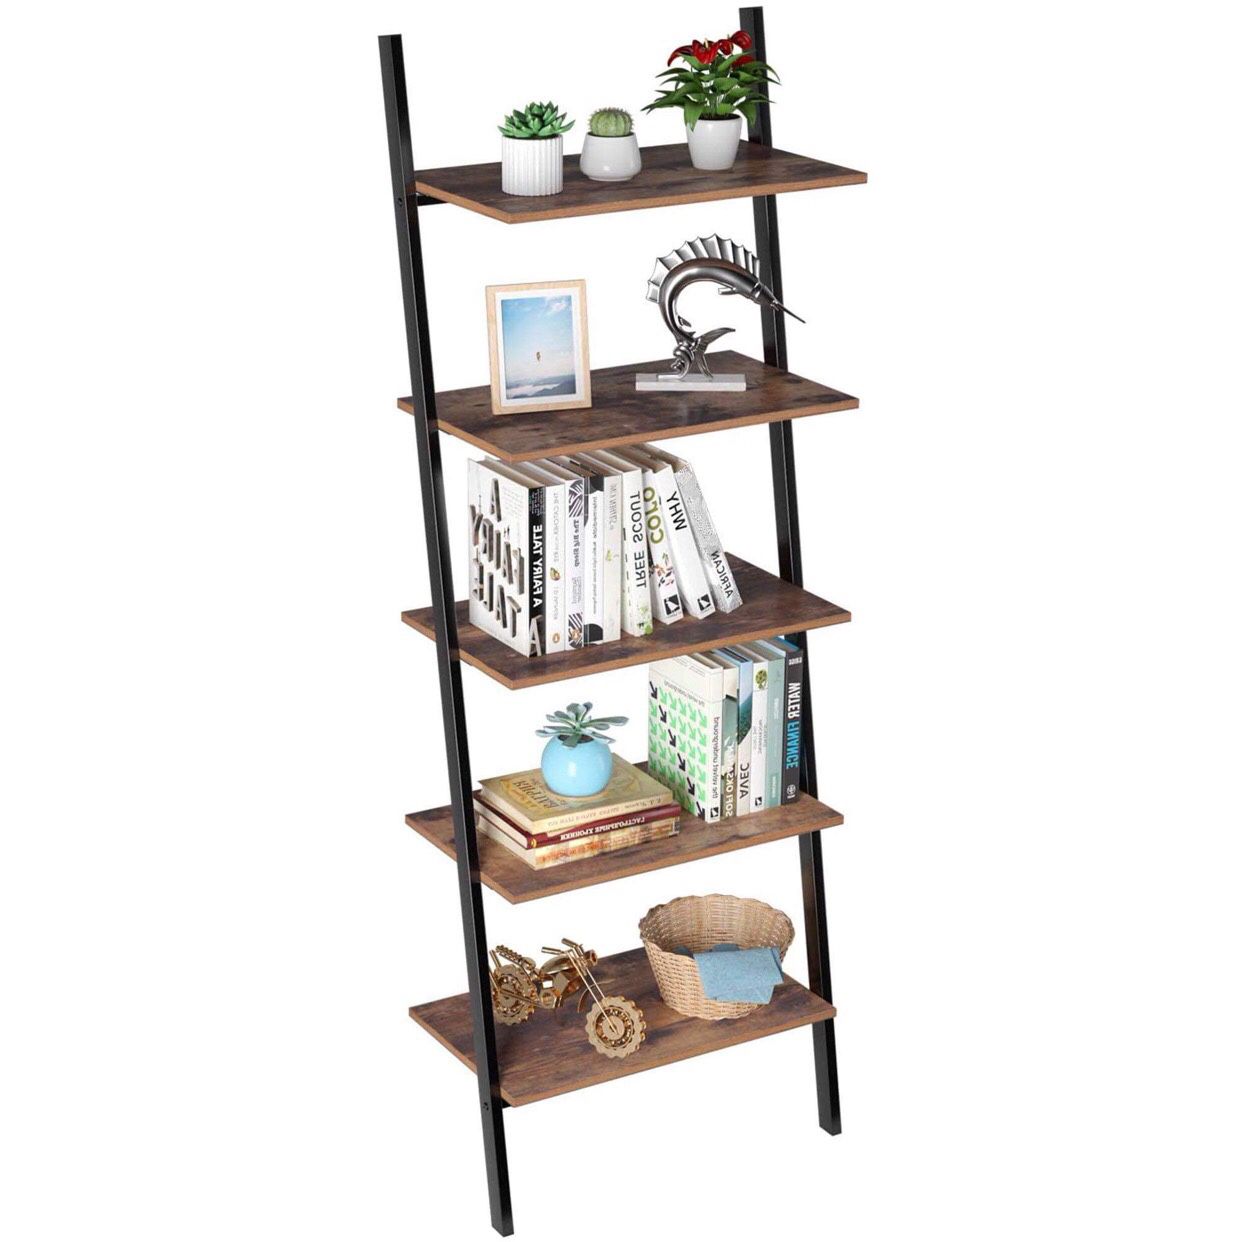 Homfa 5-Tier Industrial Ladder Shelf, Leaning Wall Bookcase Plant Flower Stand, Multipurpose Storage Organizer Display Rack, Wood Look Accent Metal Fr